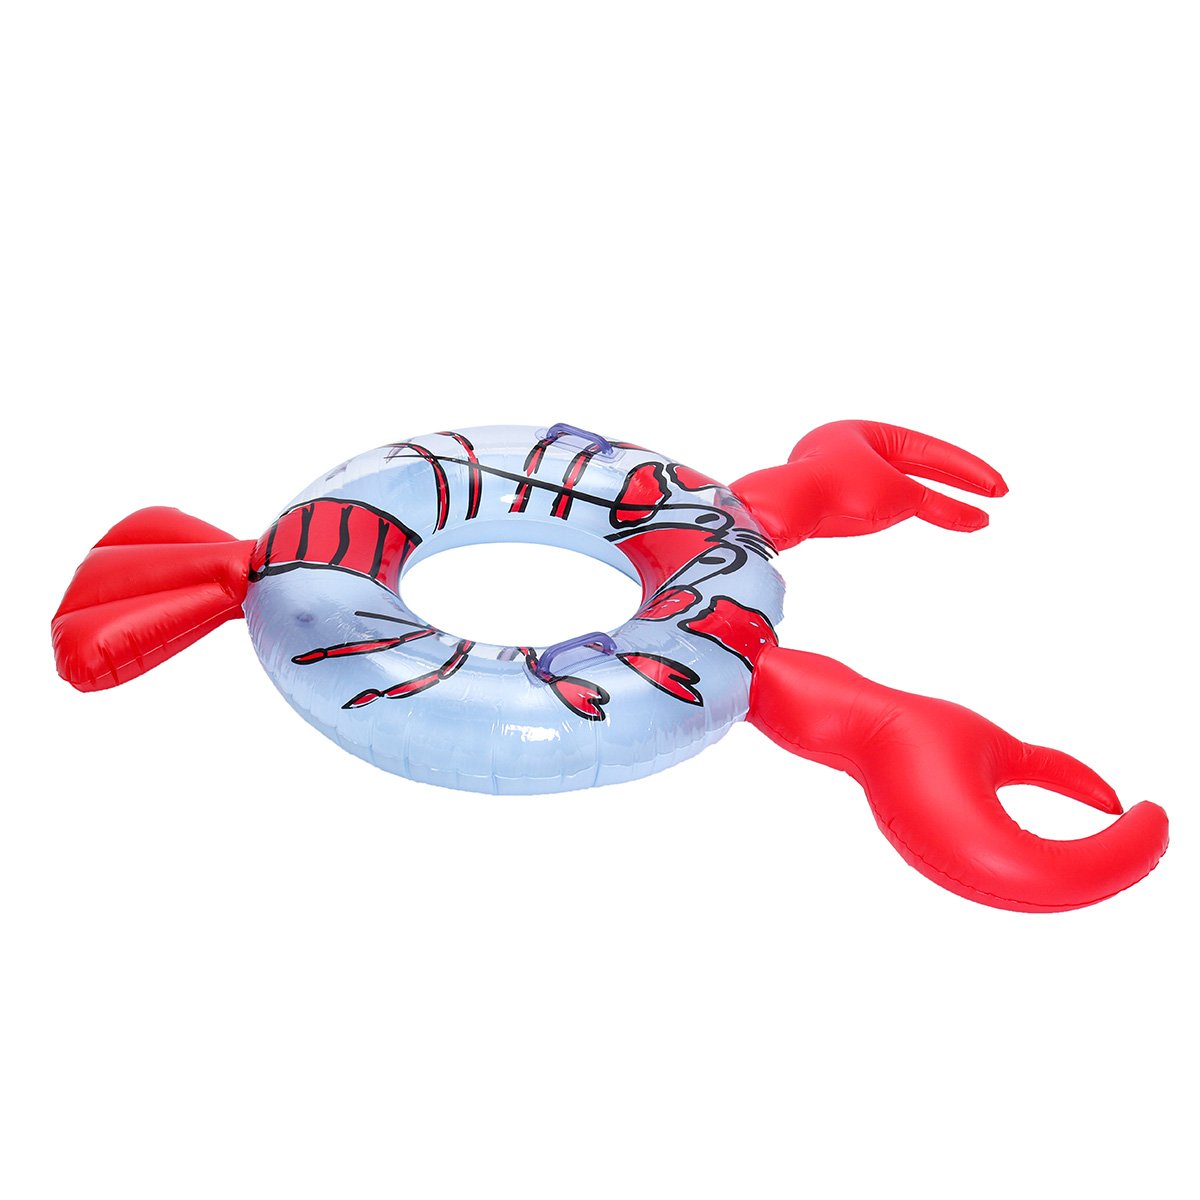 Inflatable-Crawfish-Swim-Ring-Swimming-Pool-Bathing-Floating-Circle-Swimming-Safety-Protection-Tools-1657027-3